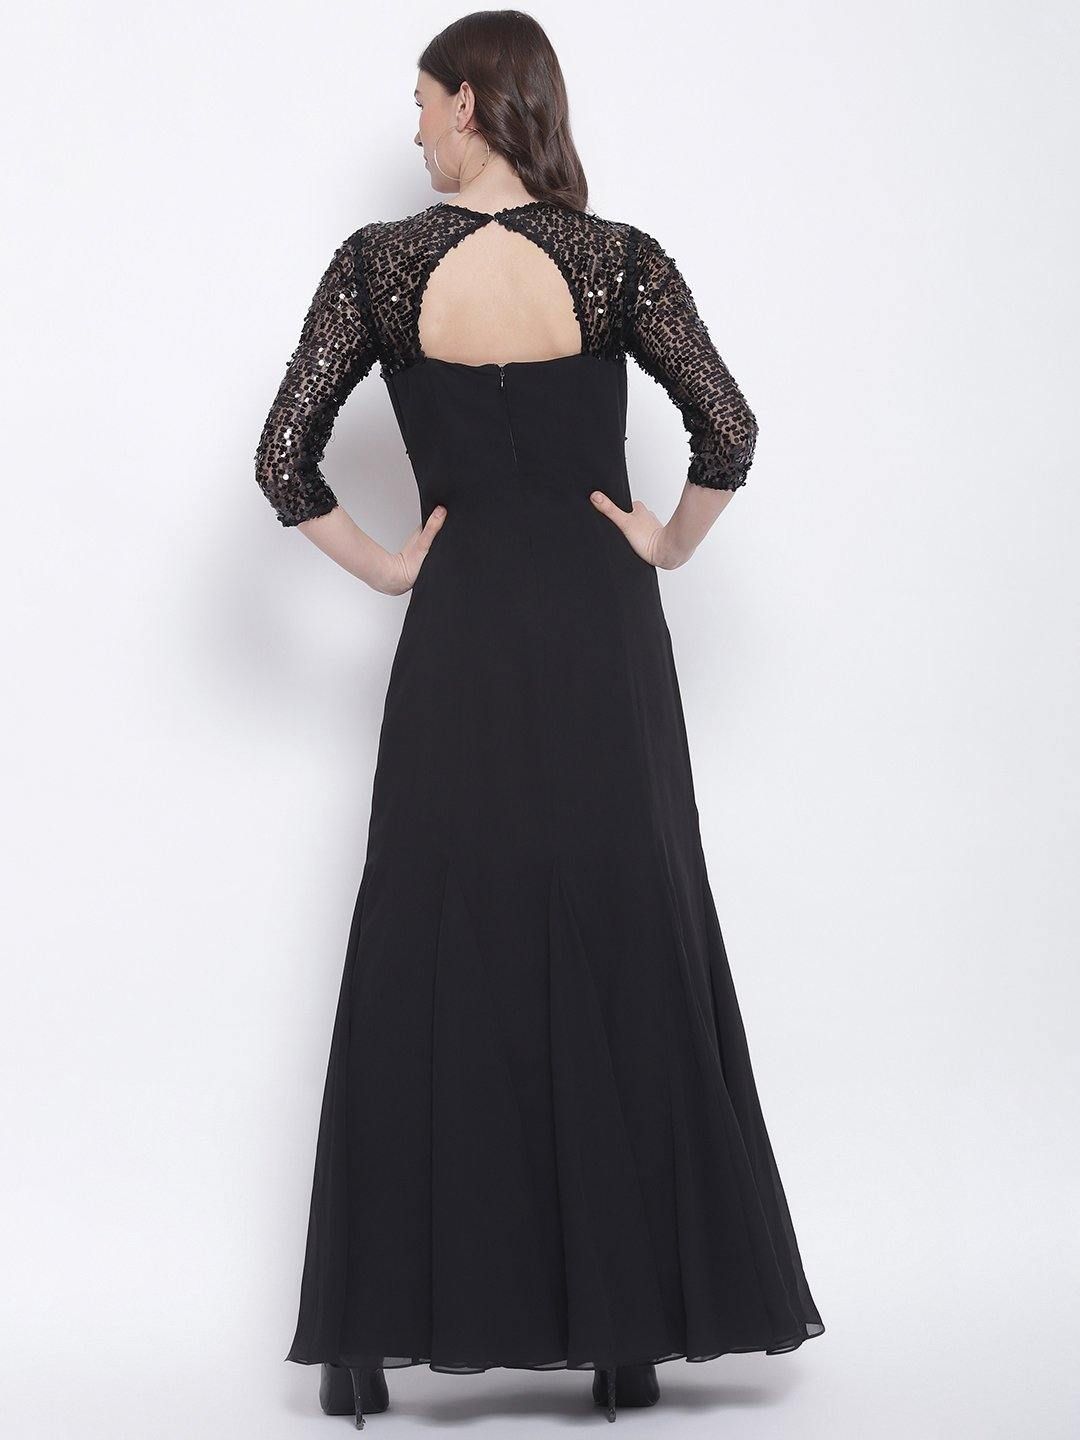 Buy Black Net Girls Gown (NFG-189) Online